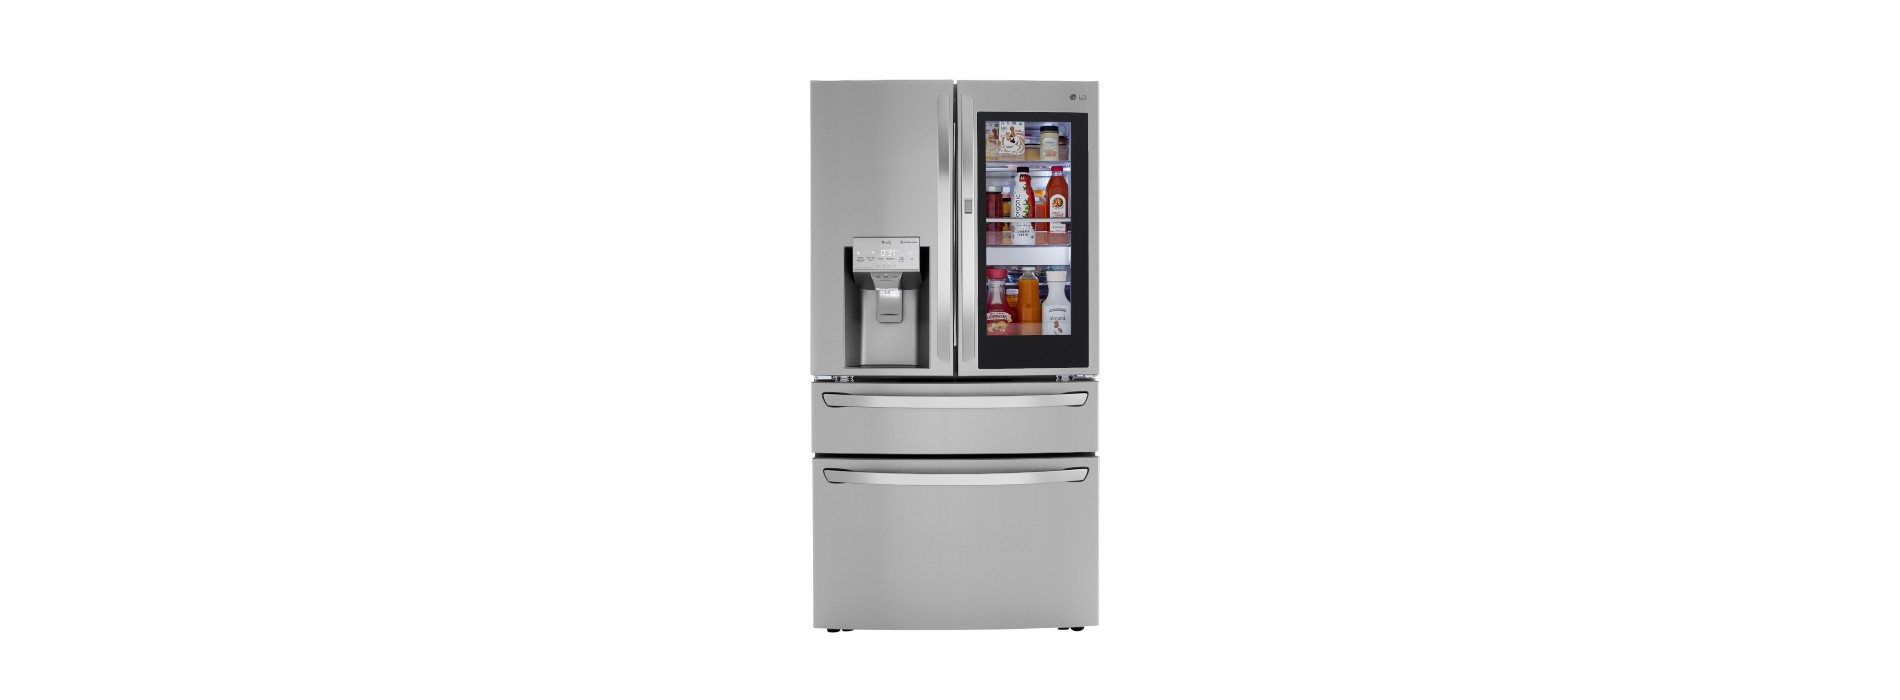 https://www.multivu.com/players/English/8772151-lg-electronics-craft-ice-refrigerators/image/LGHero_1599686684570-HR.jpg